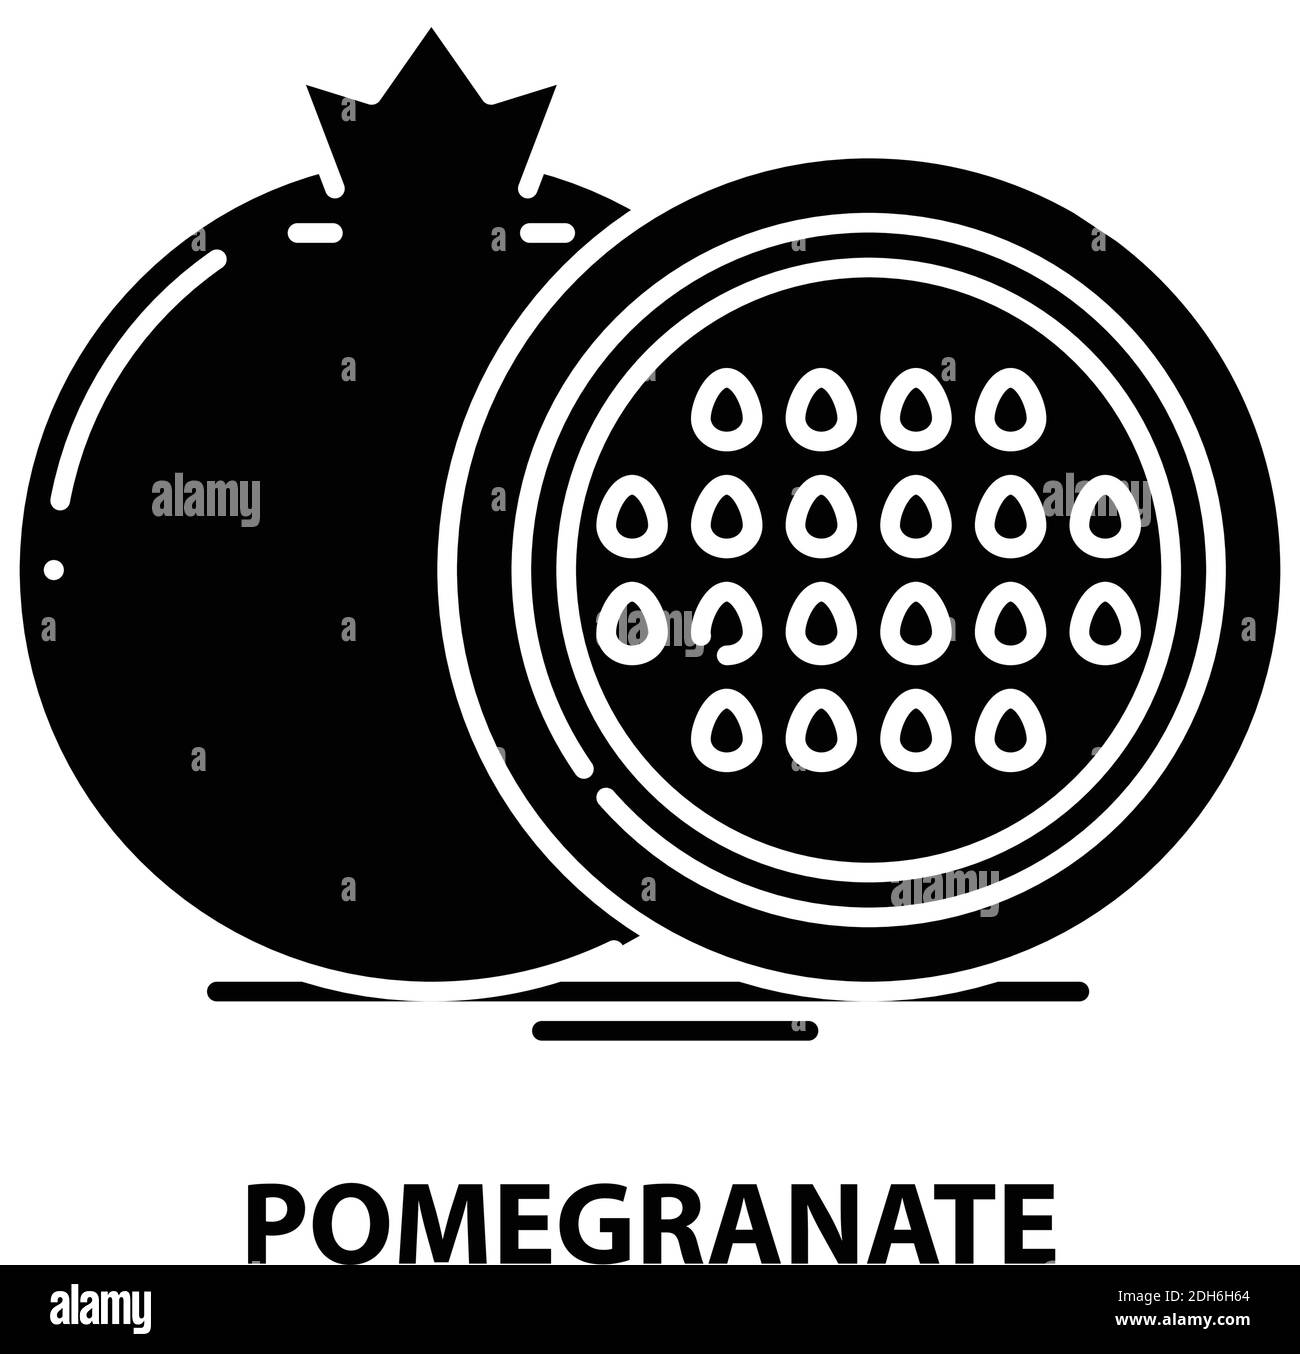 pomegranate icon, black vector sign with editable strokes, concept illustration Stock Vector